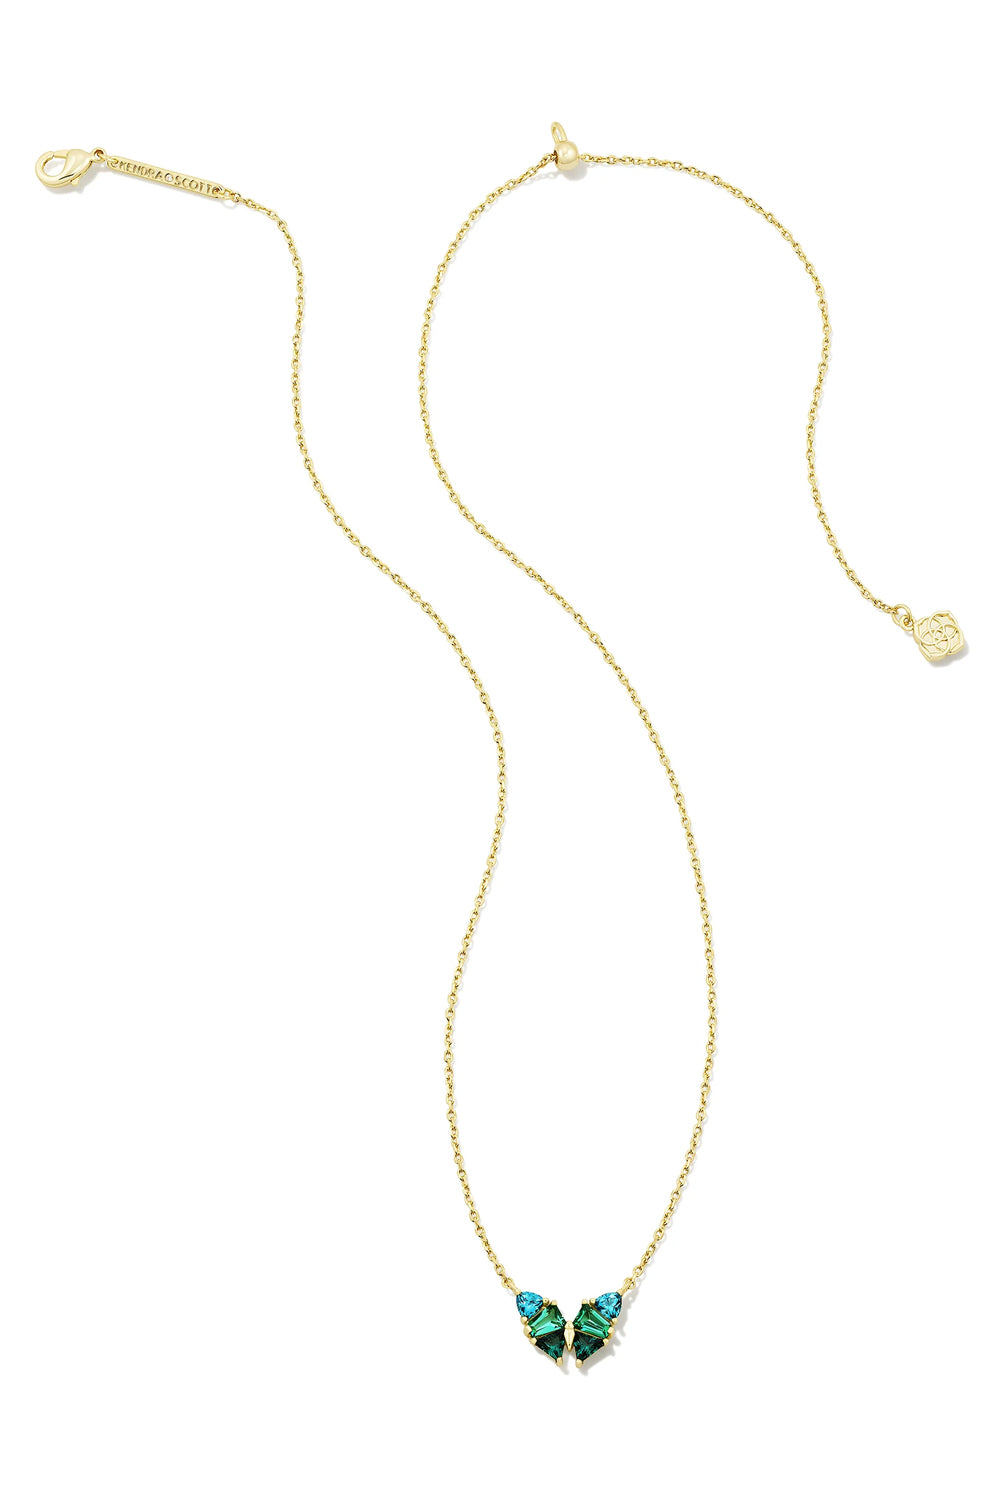 Kendra Scott: Blair Gold Butterfly Small Short Pendant Necklace - Green Mix | Makk Fashions